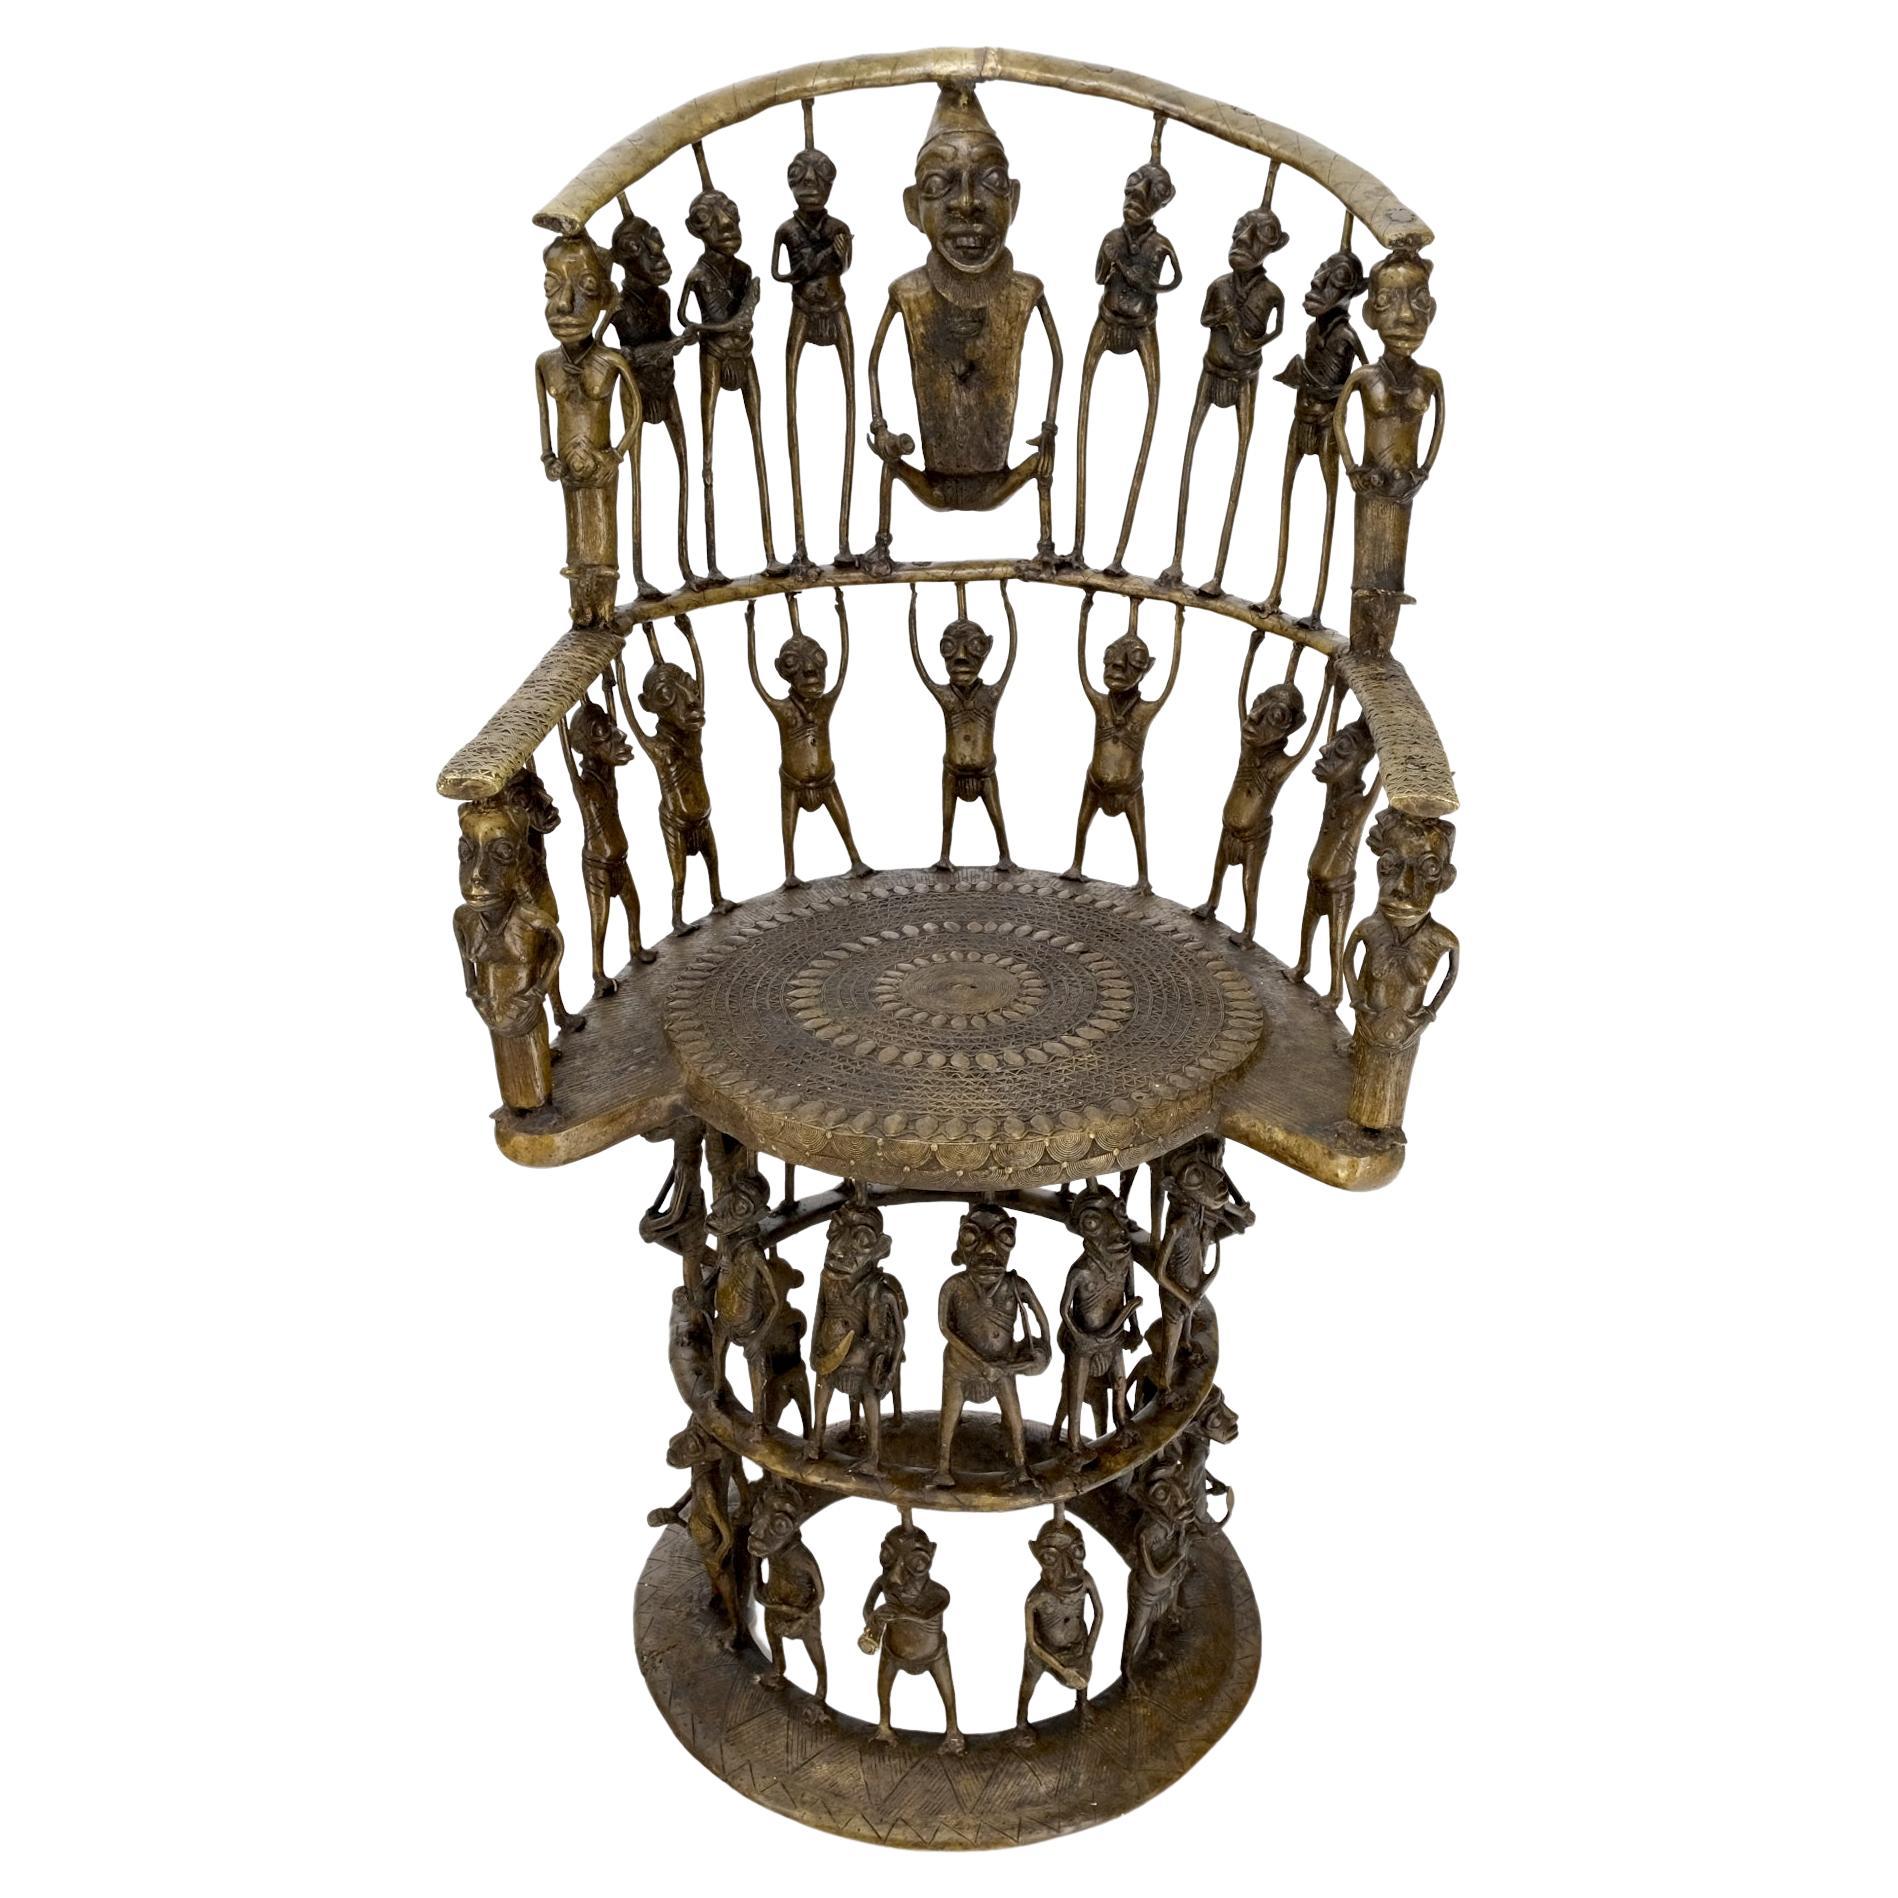 Chaise trône figurative africaine du Cameroun en bronze massif avec 44 figurines